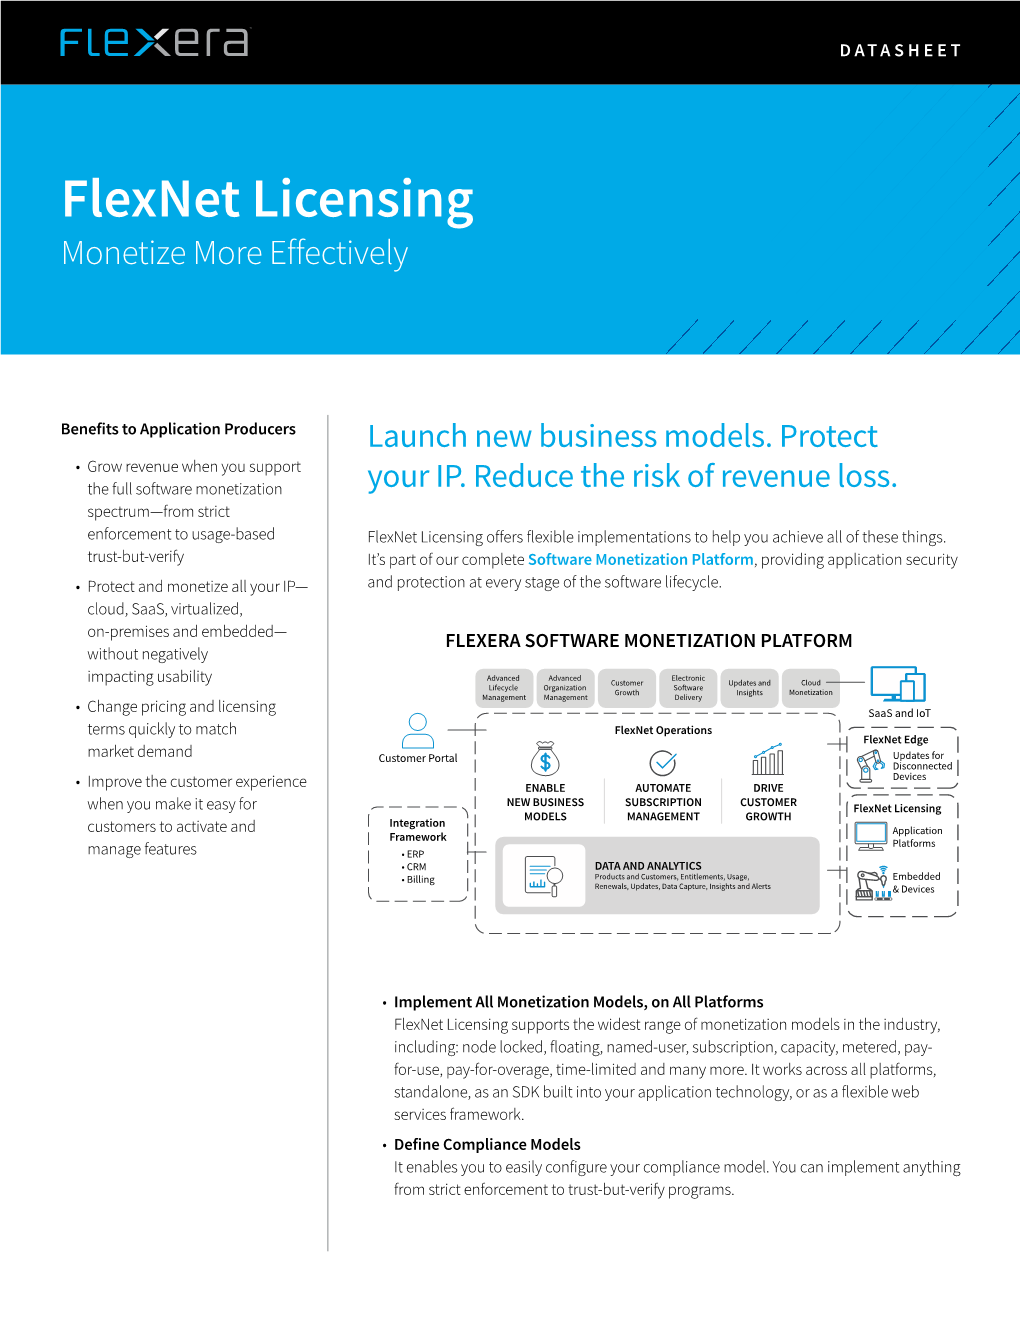 Flexnet Licensing Monetize More Effectively